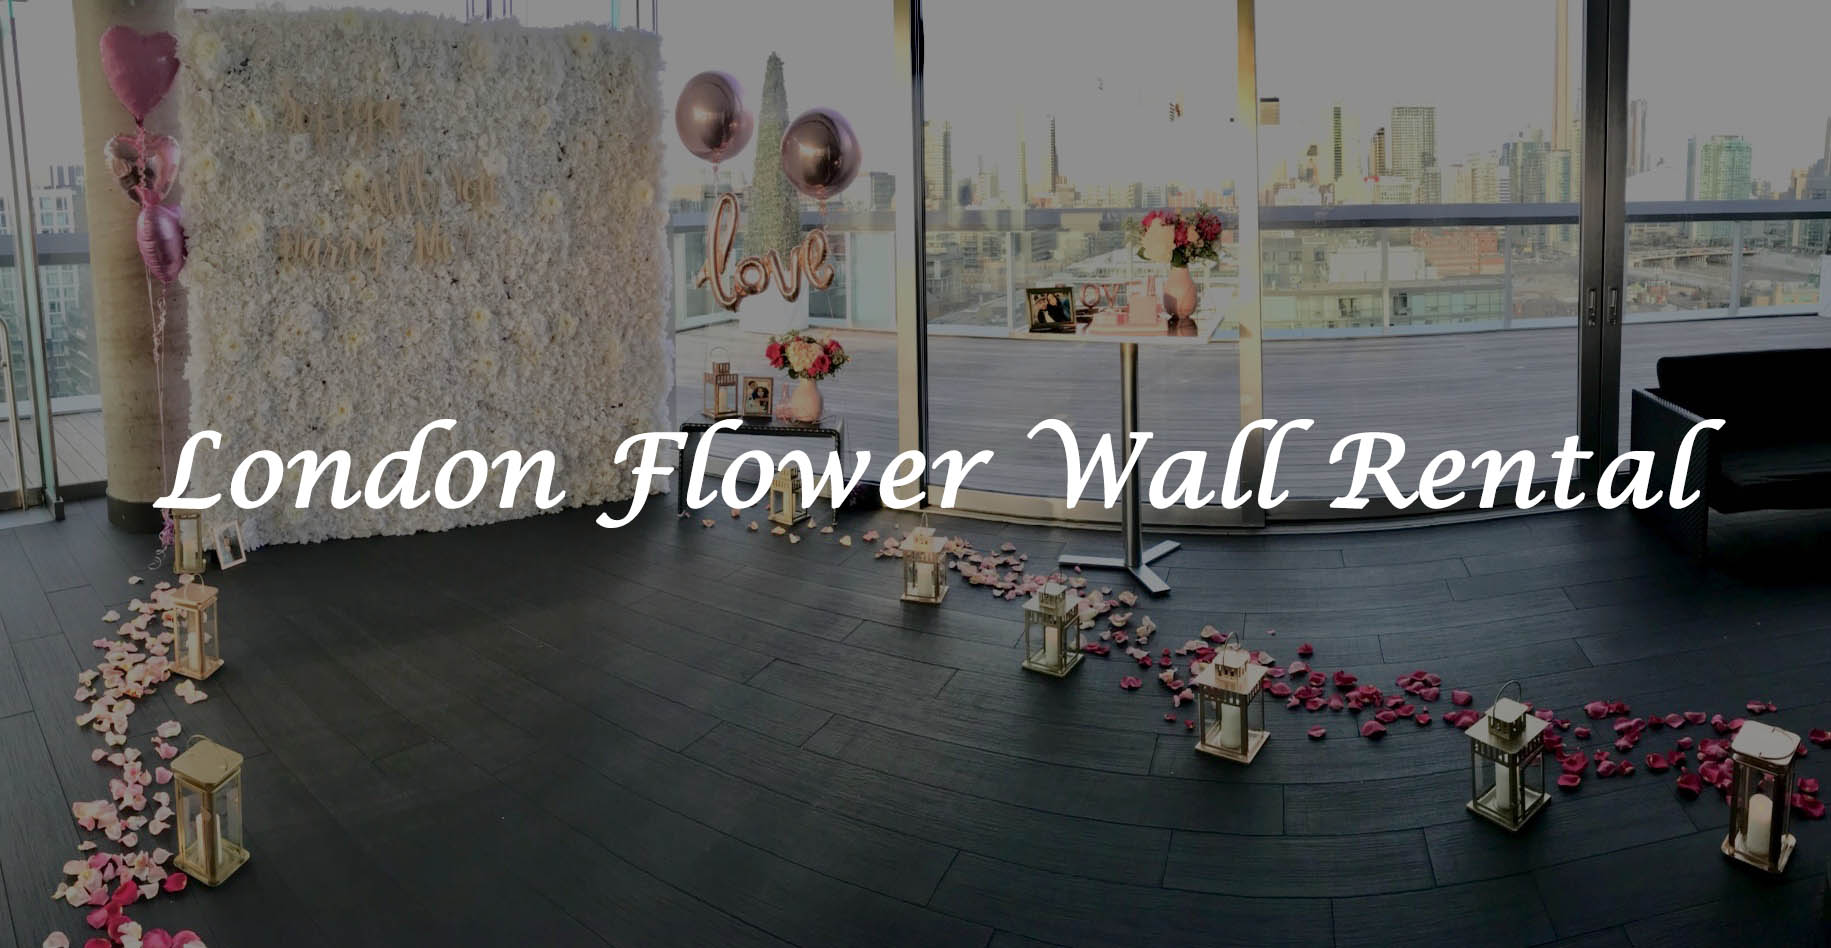 Ajax Flower Wall Rental